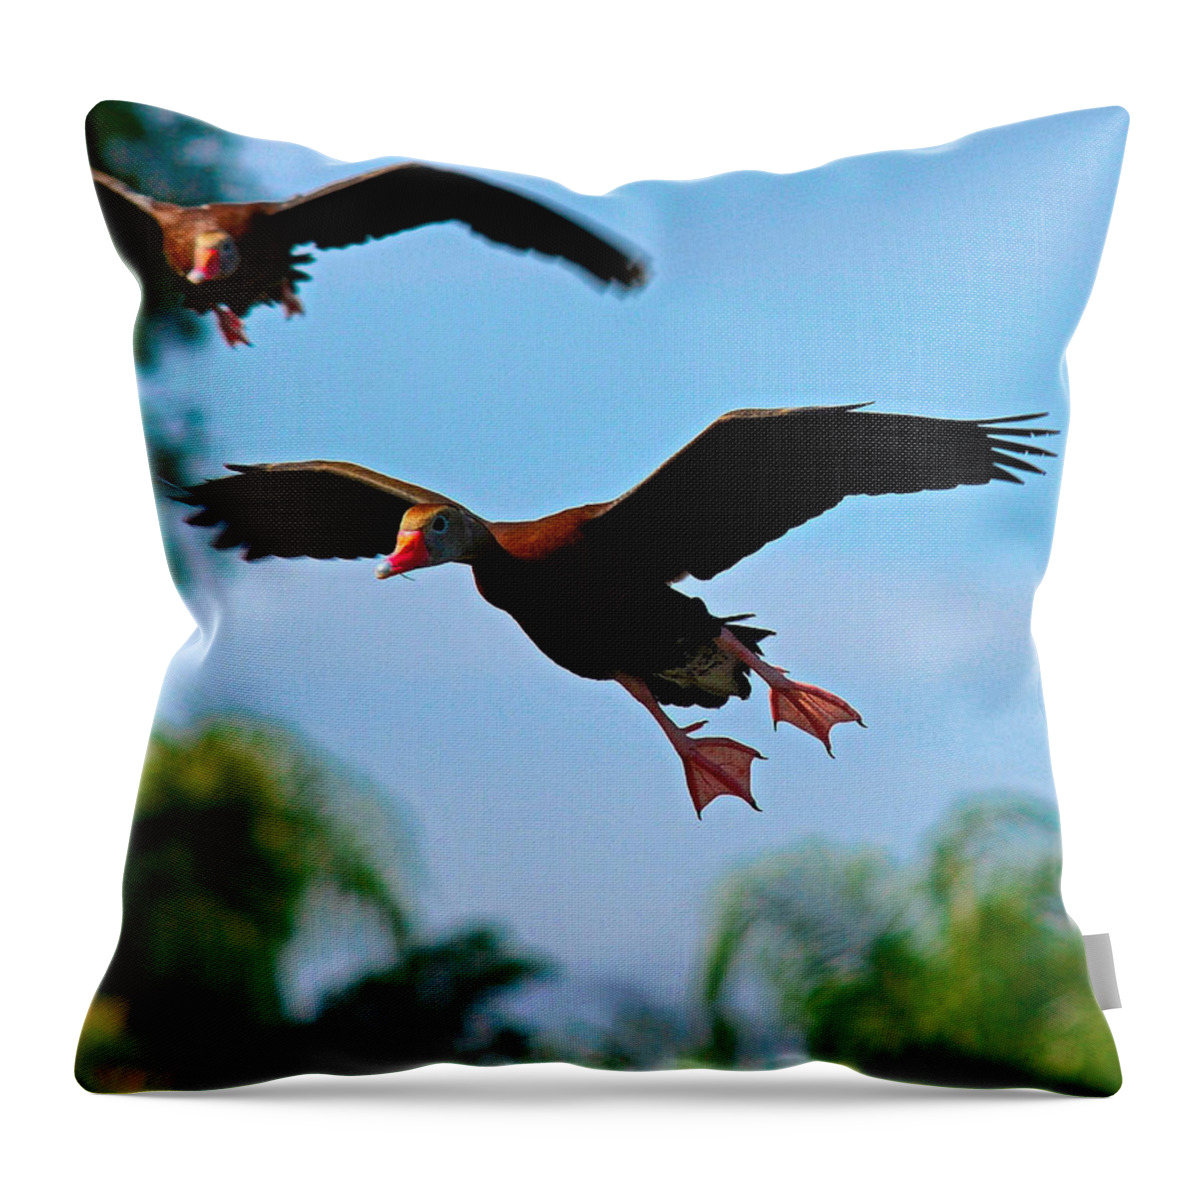 Birds Throw Pillow featuring the photograph 3 D by Alison Belsan Horton